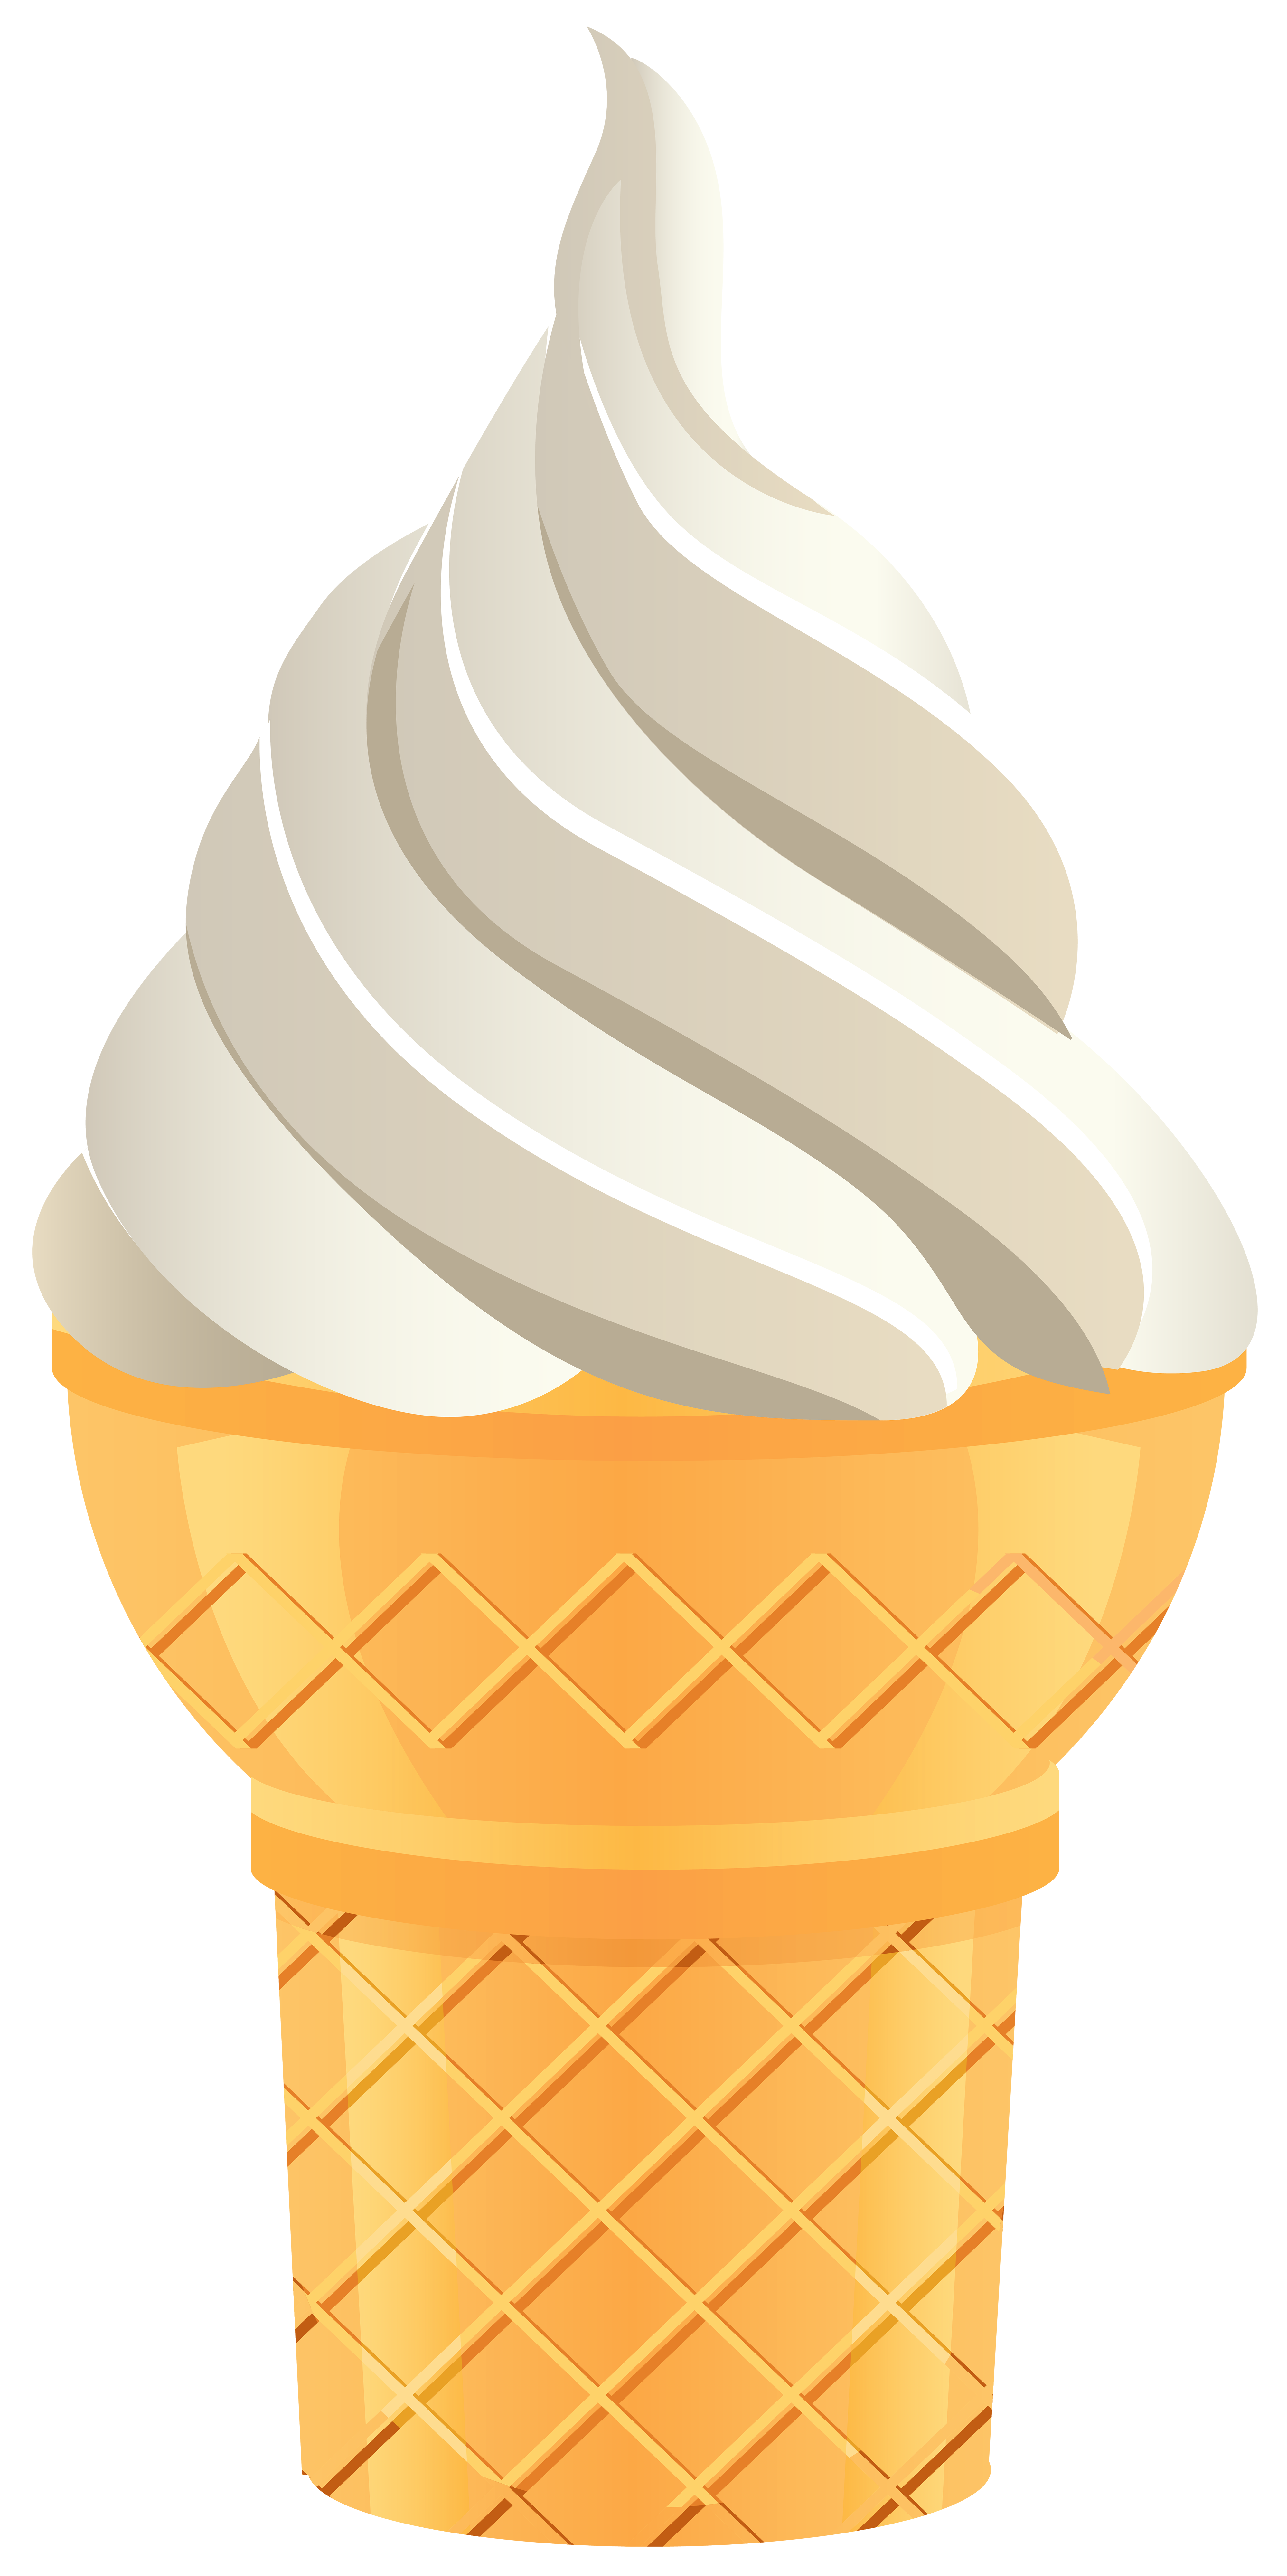 Yogurt clipart transparent background. Vanilla ice cream cone